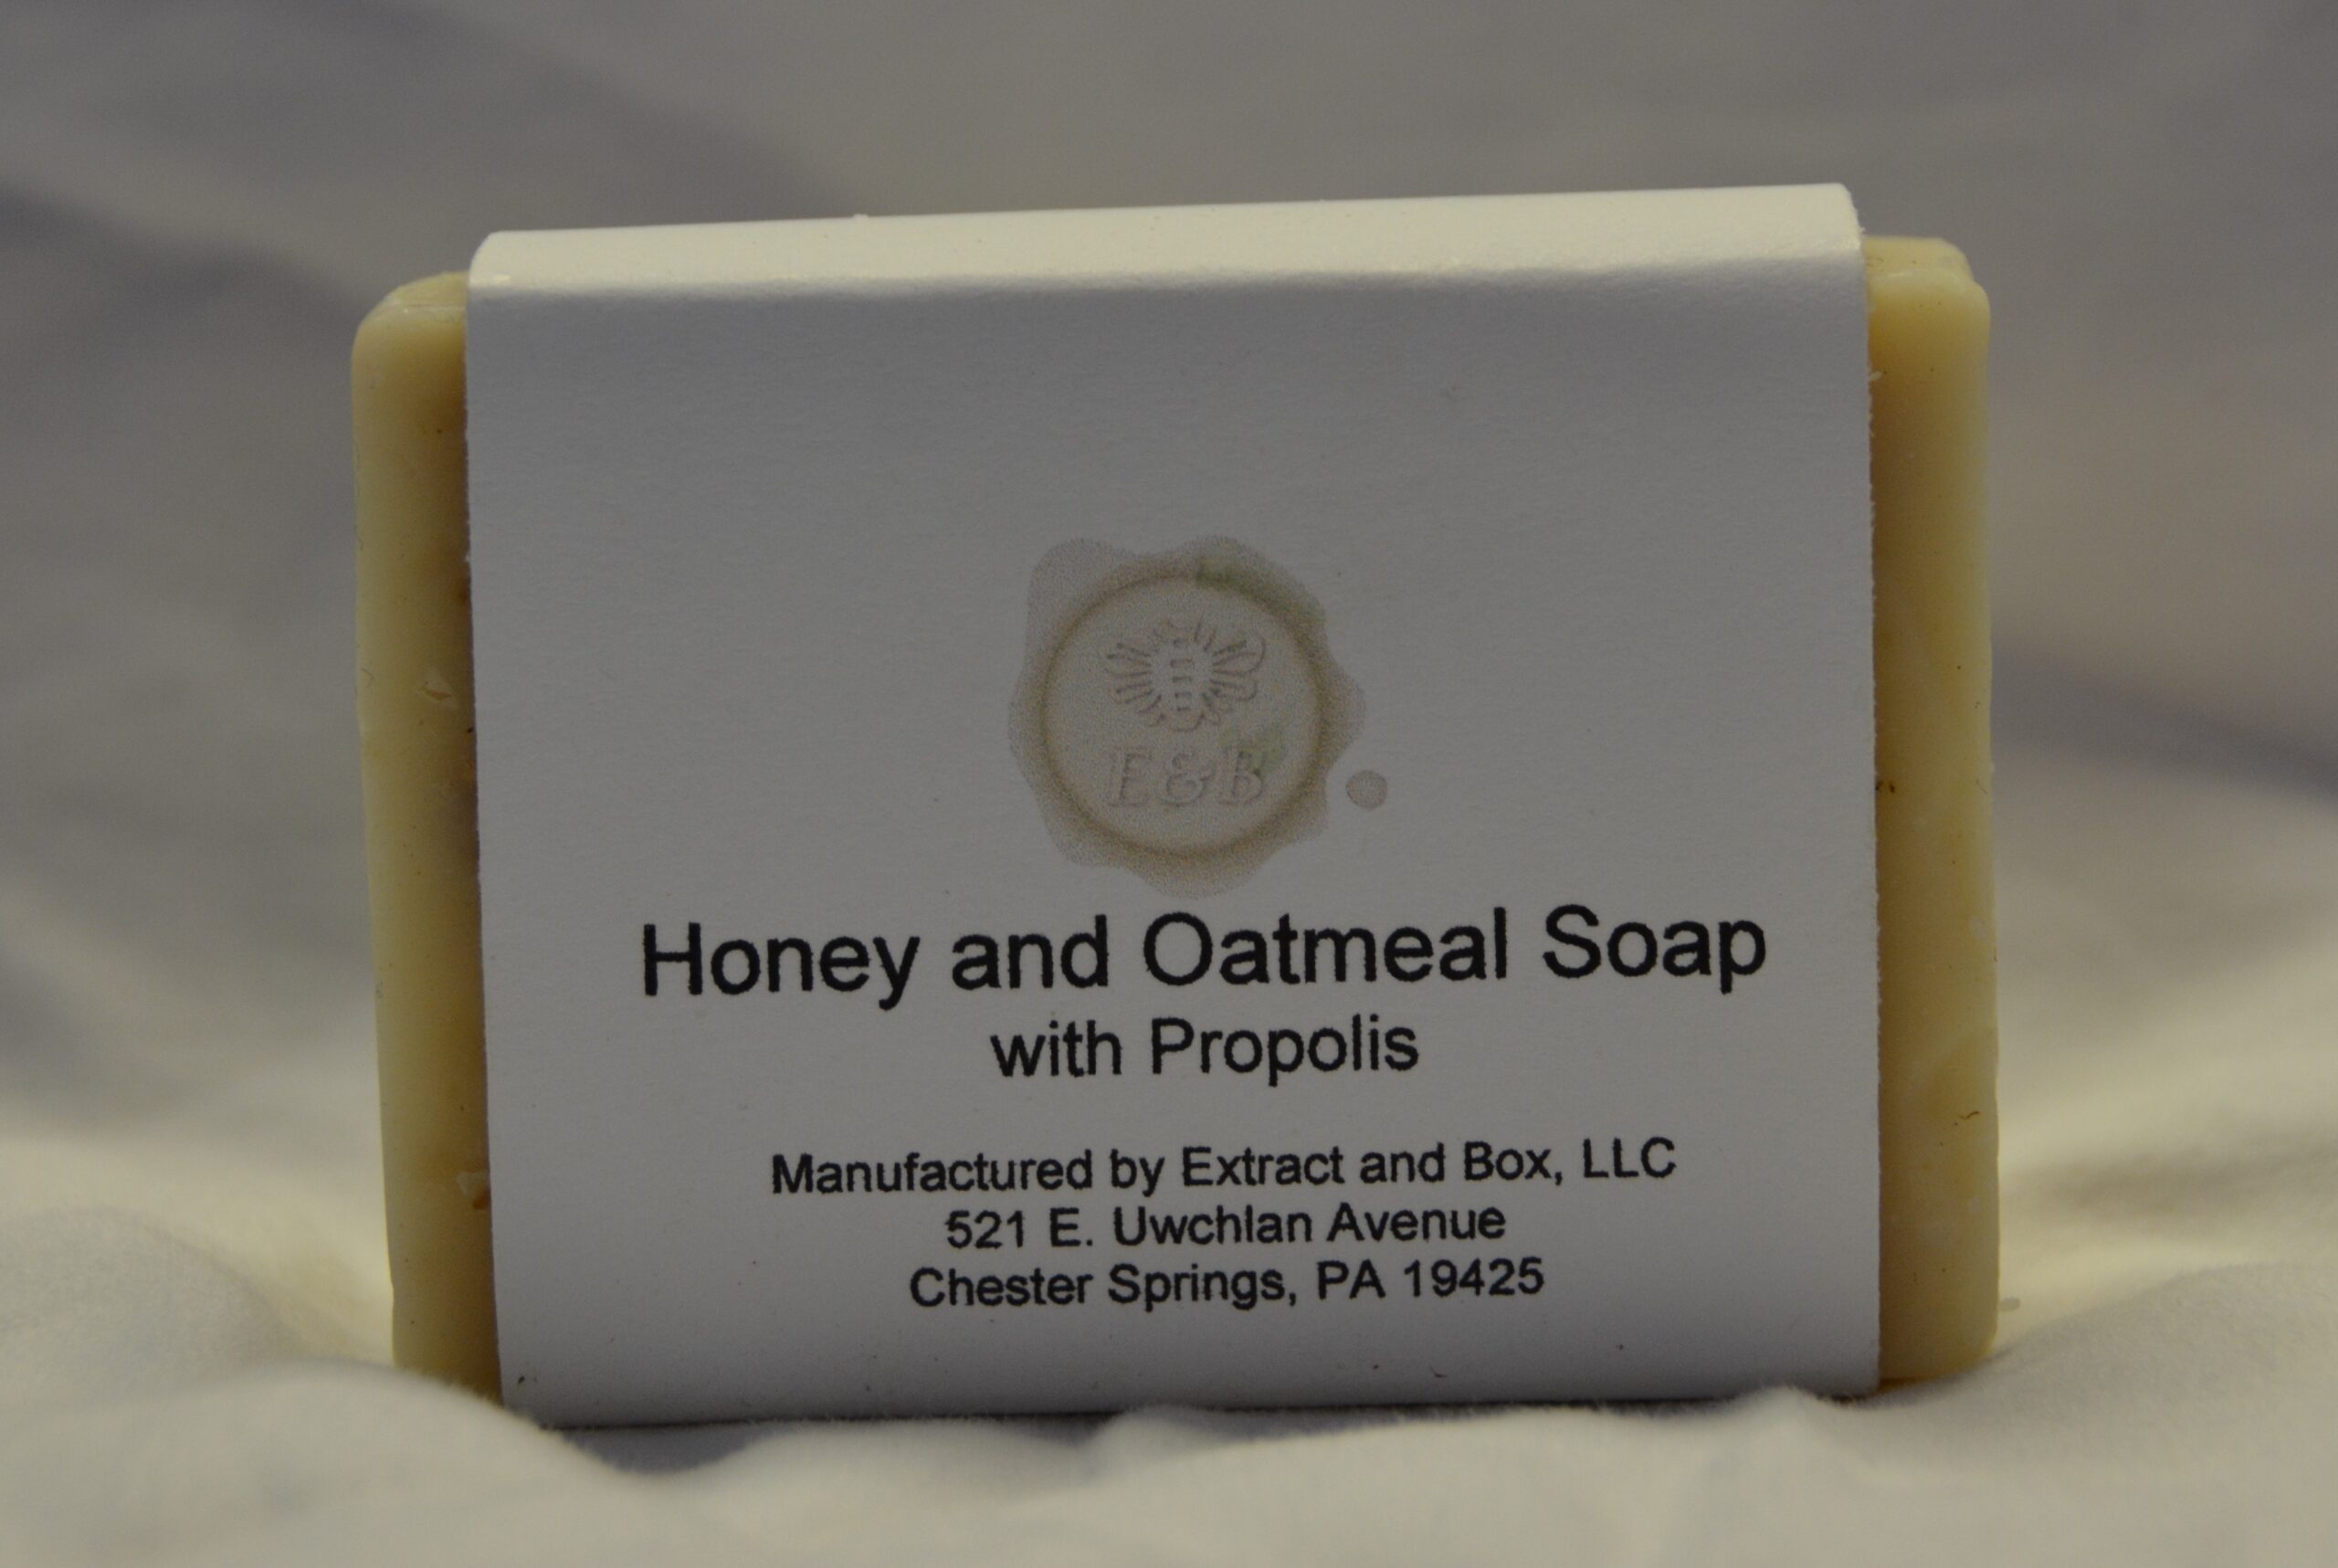 Honey and Oatmeal Soap